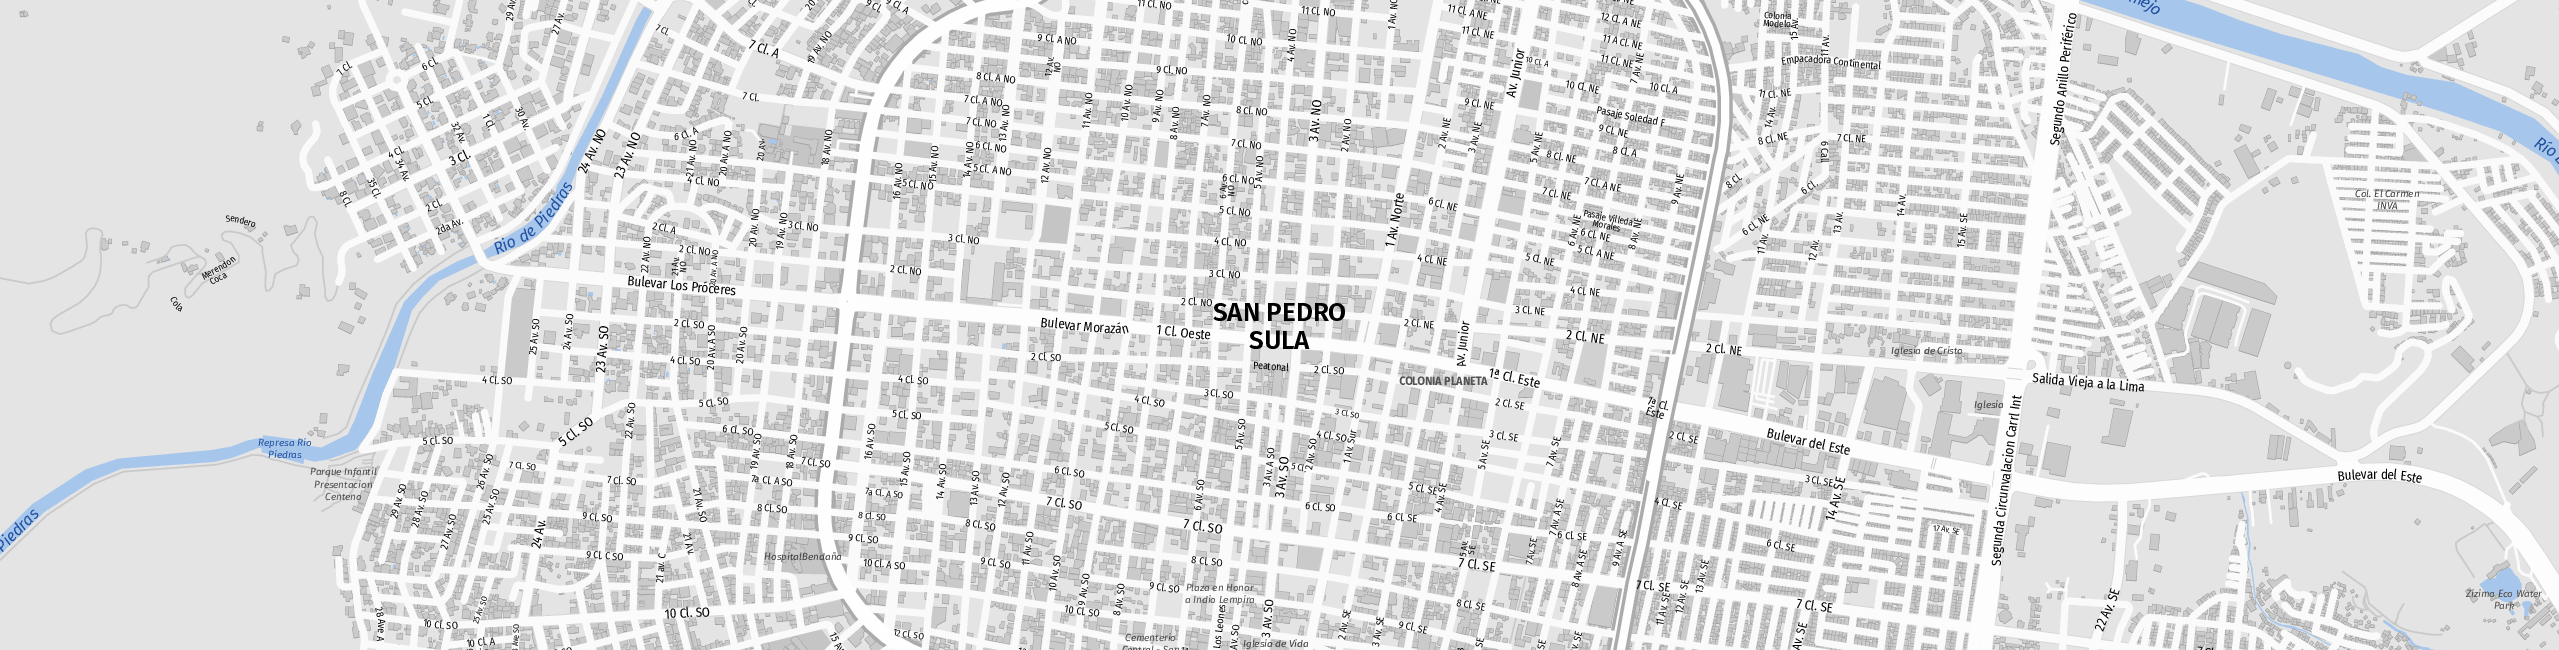 Stadtplan San Pedro Sula zum Downloaden.